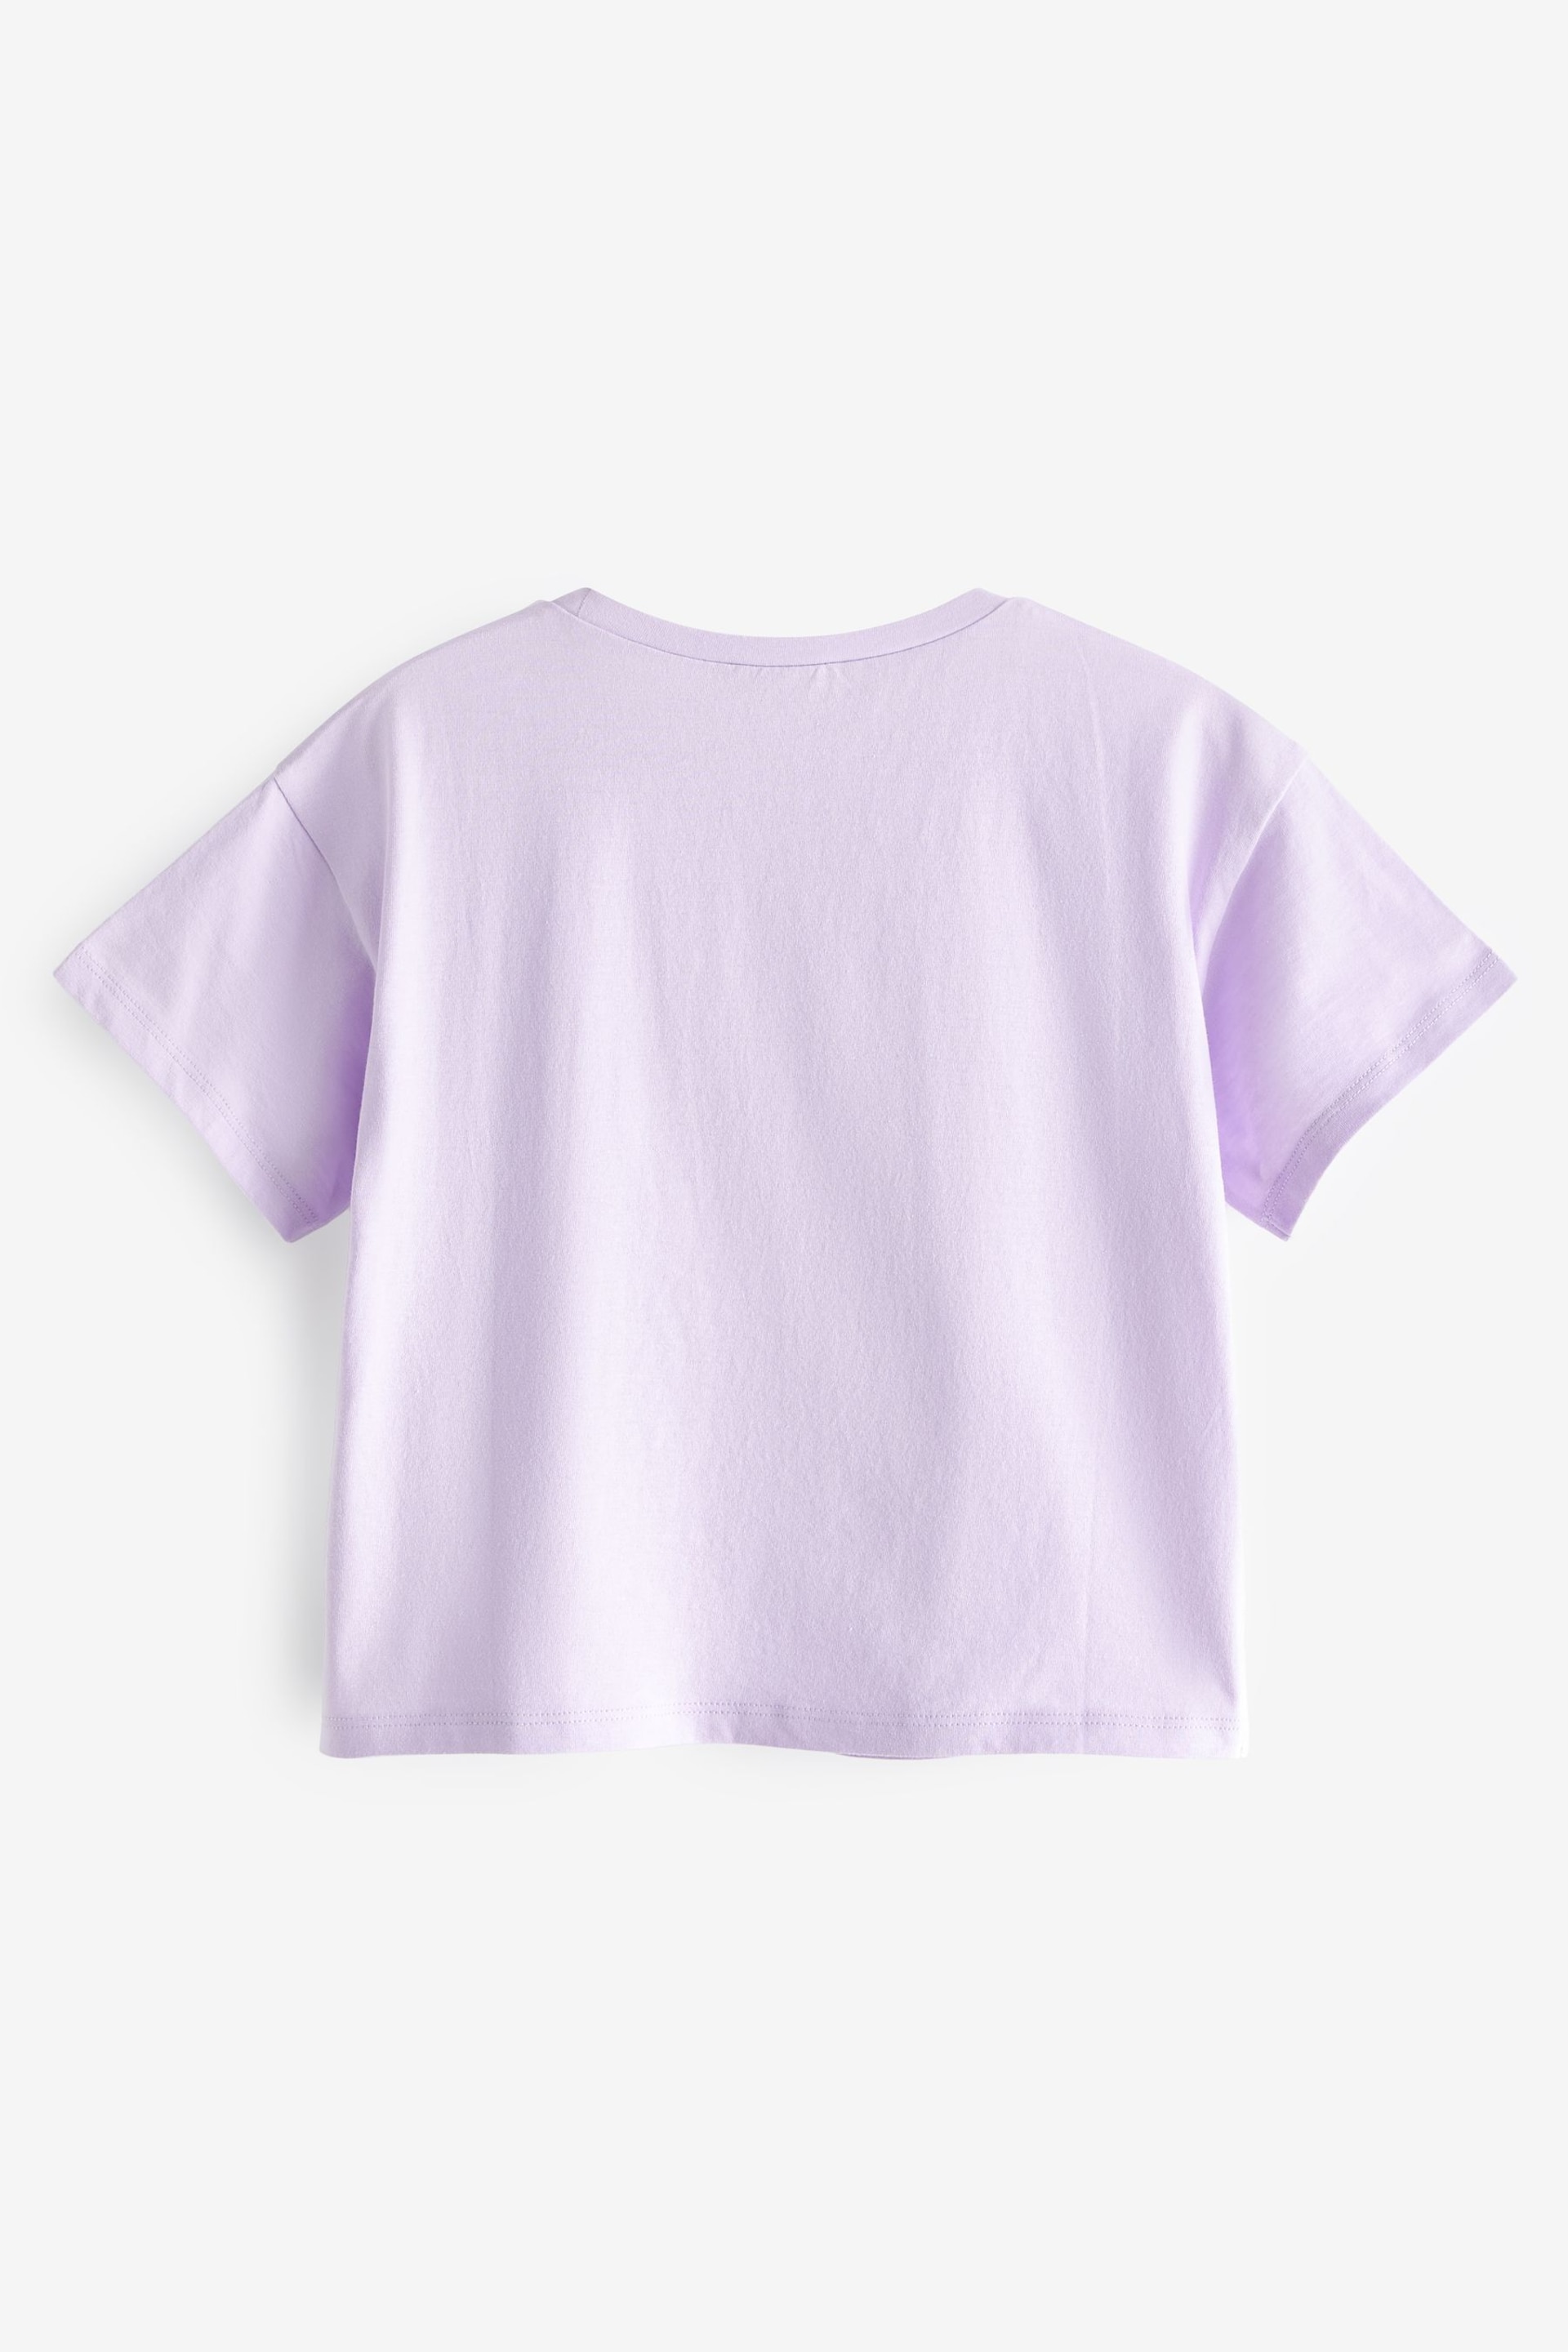 Benetton Girls T-Shirt - Image 2 of 4